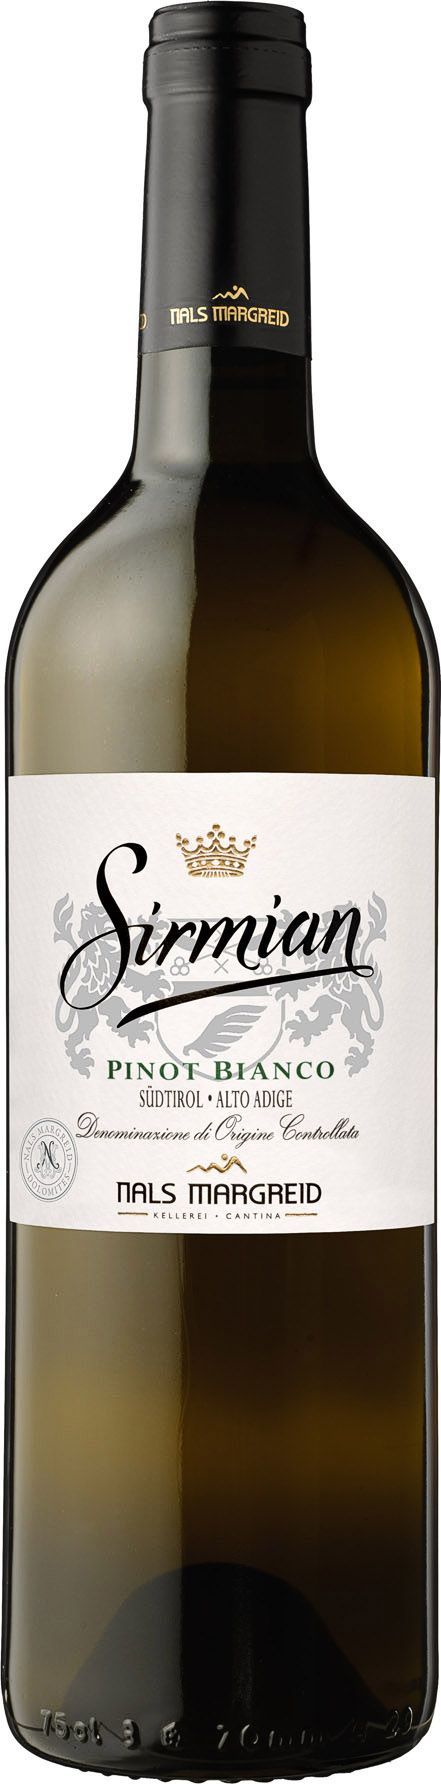 Nals Margreid, Sirmian Pinot Blanco, 2016